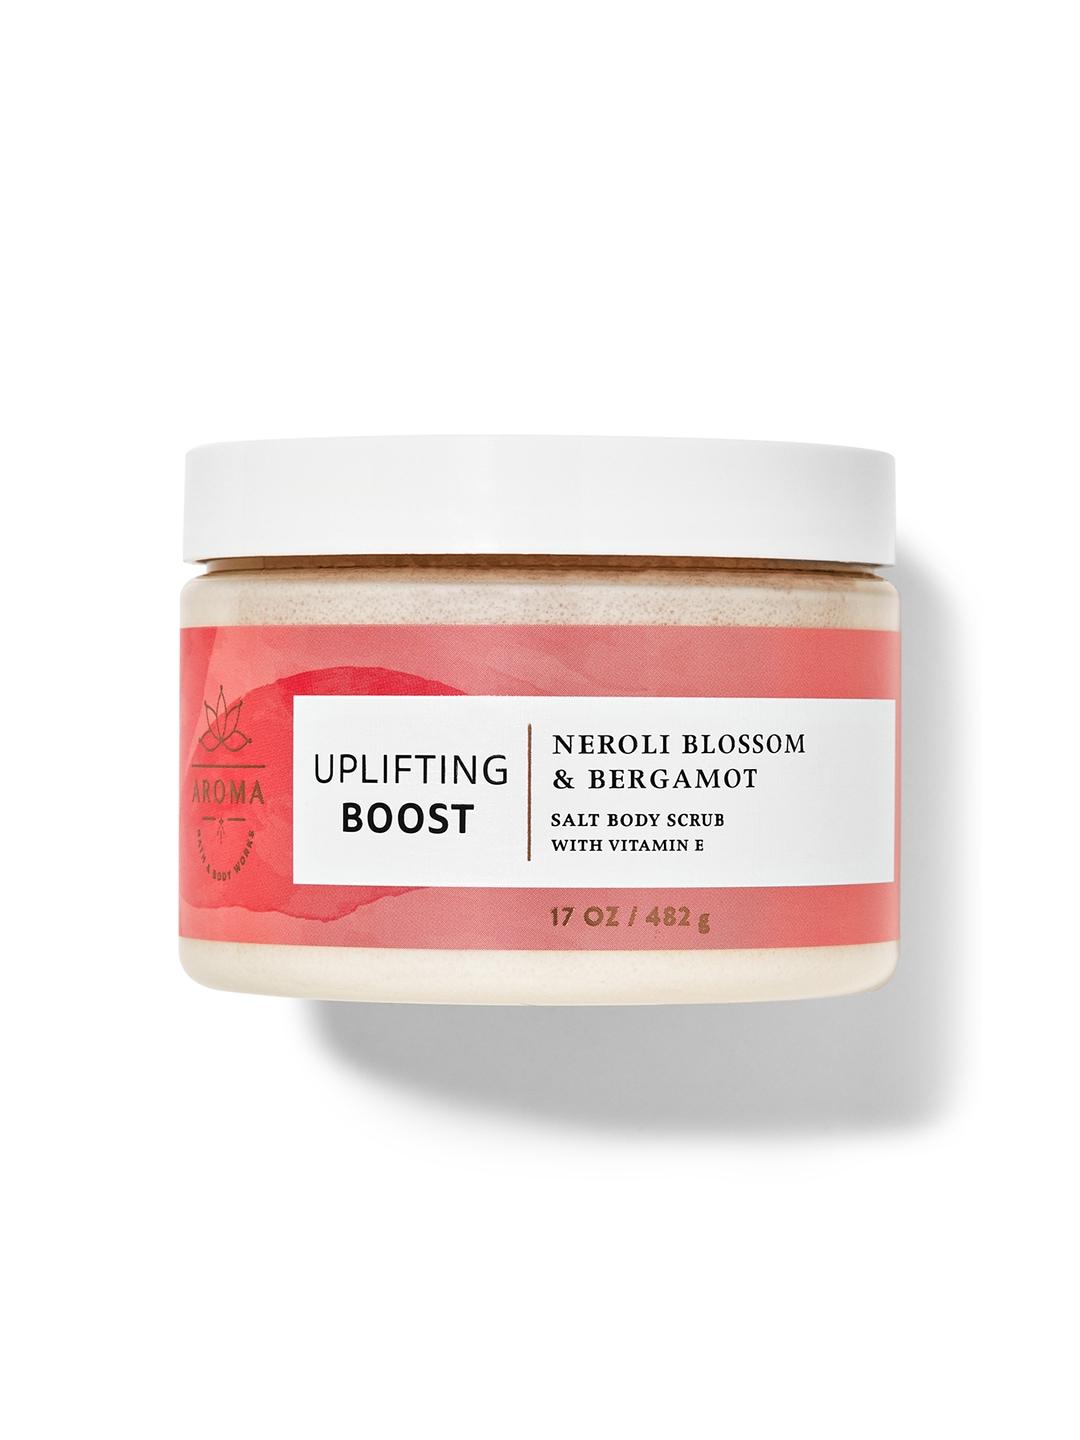 Bath & Body Works Neroli Blossom & Bergamot Salt Body Scrub with Vitamin E - 482 g